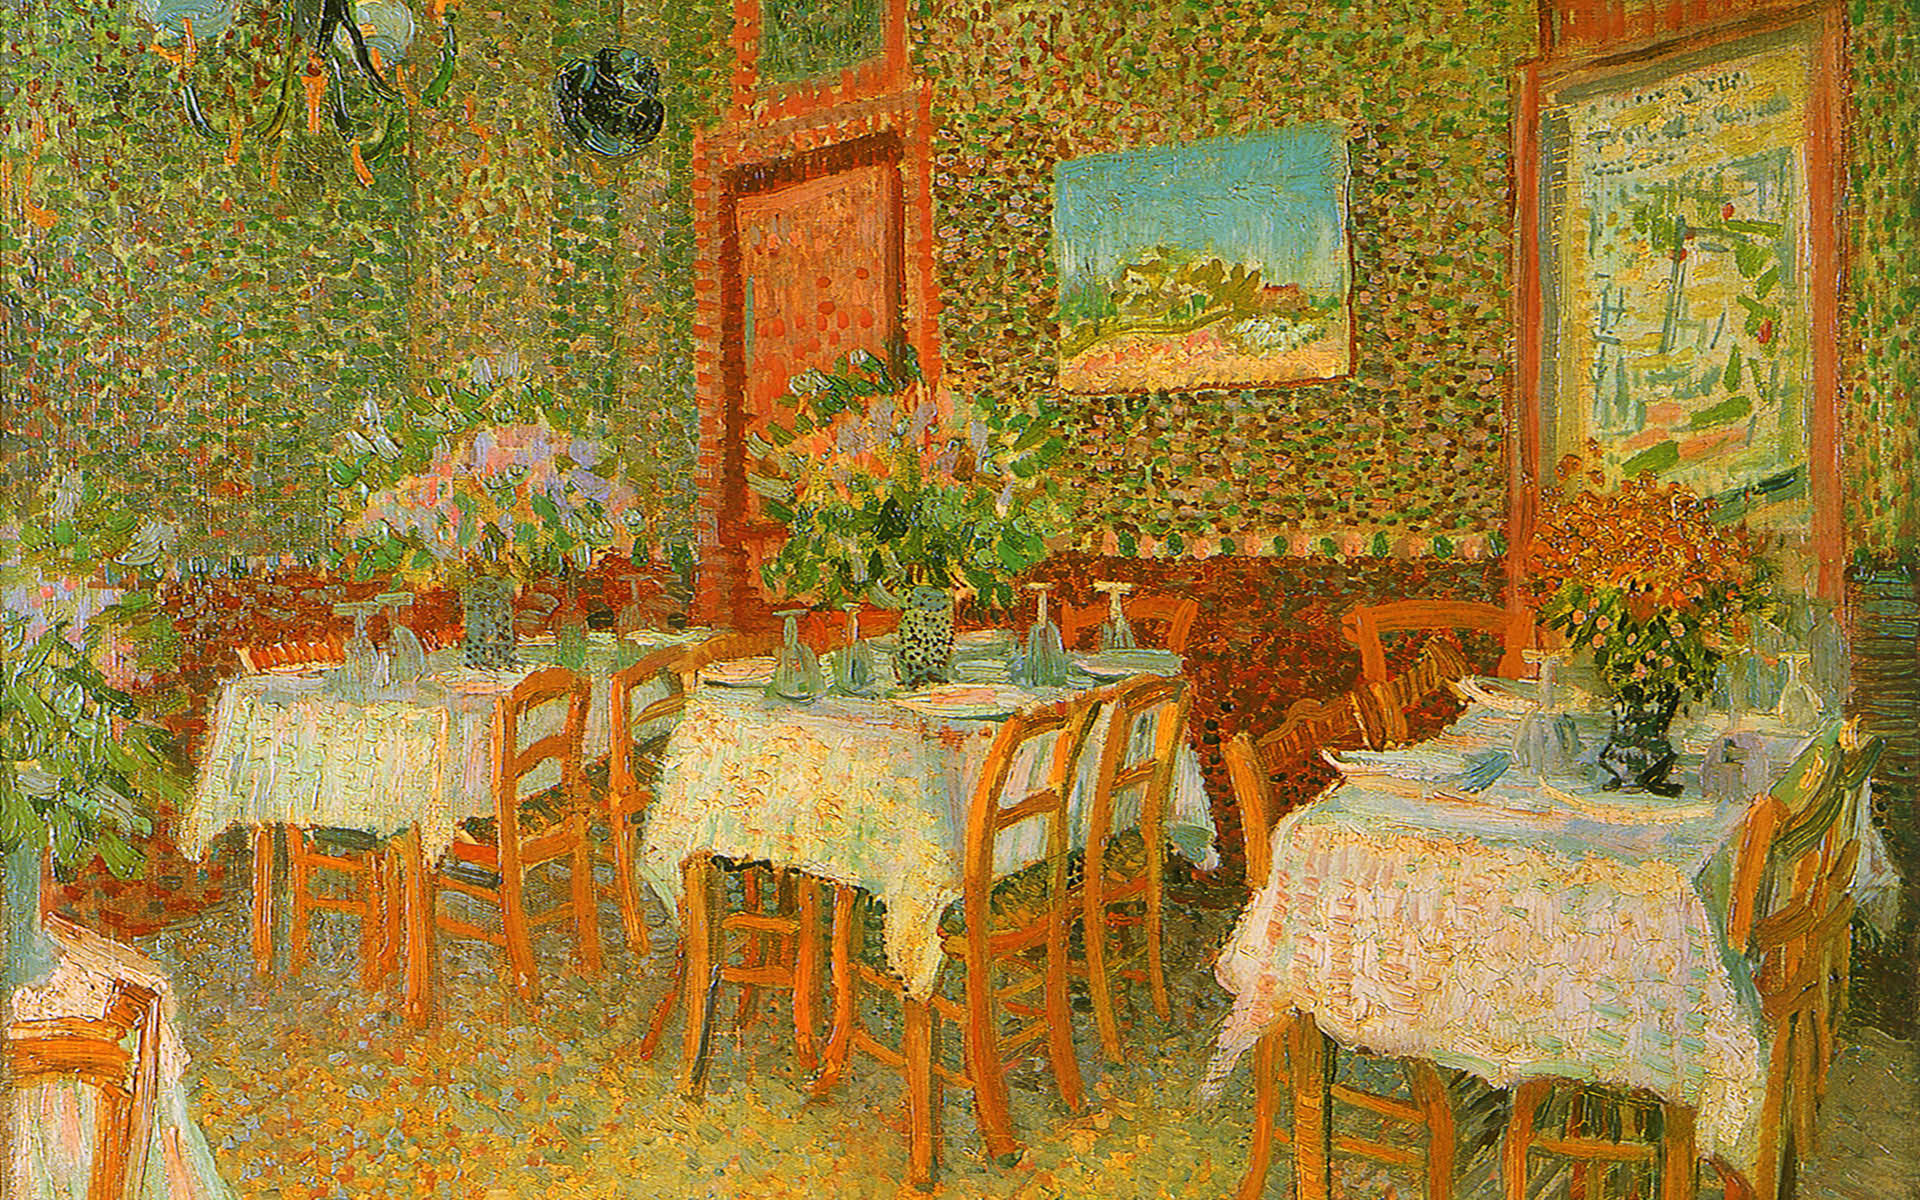 Free Download Van Gogh Wallpapers And Backgrounds 19x10 For Your Desktop Mobile Tablet Explore 47 Van Gogh Free Wallpaper Van Gogh Wallpaper For Iphone Van Gogh Wallpaper Border Van